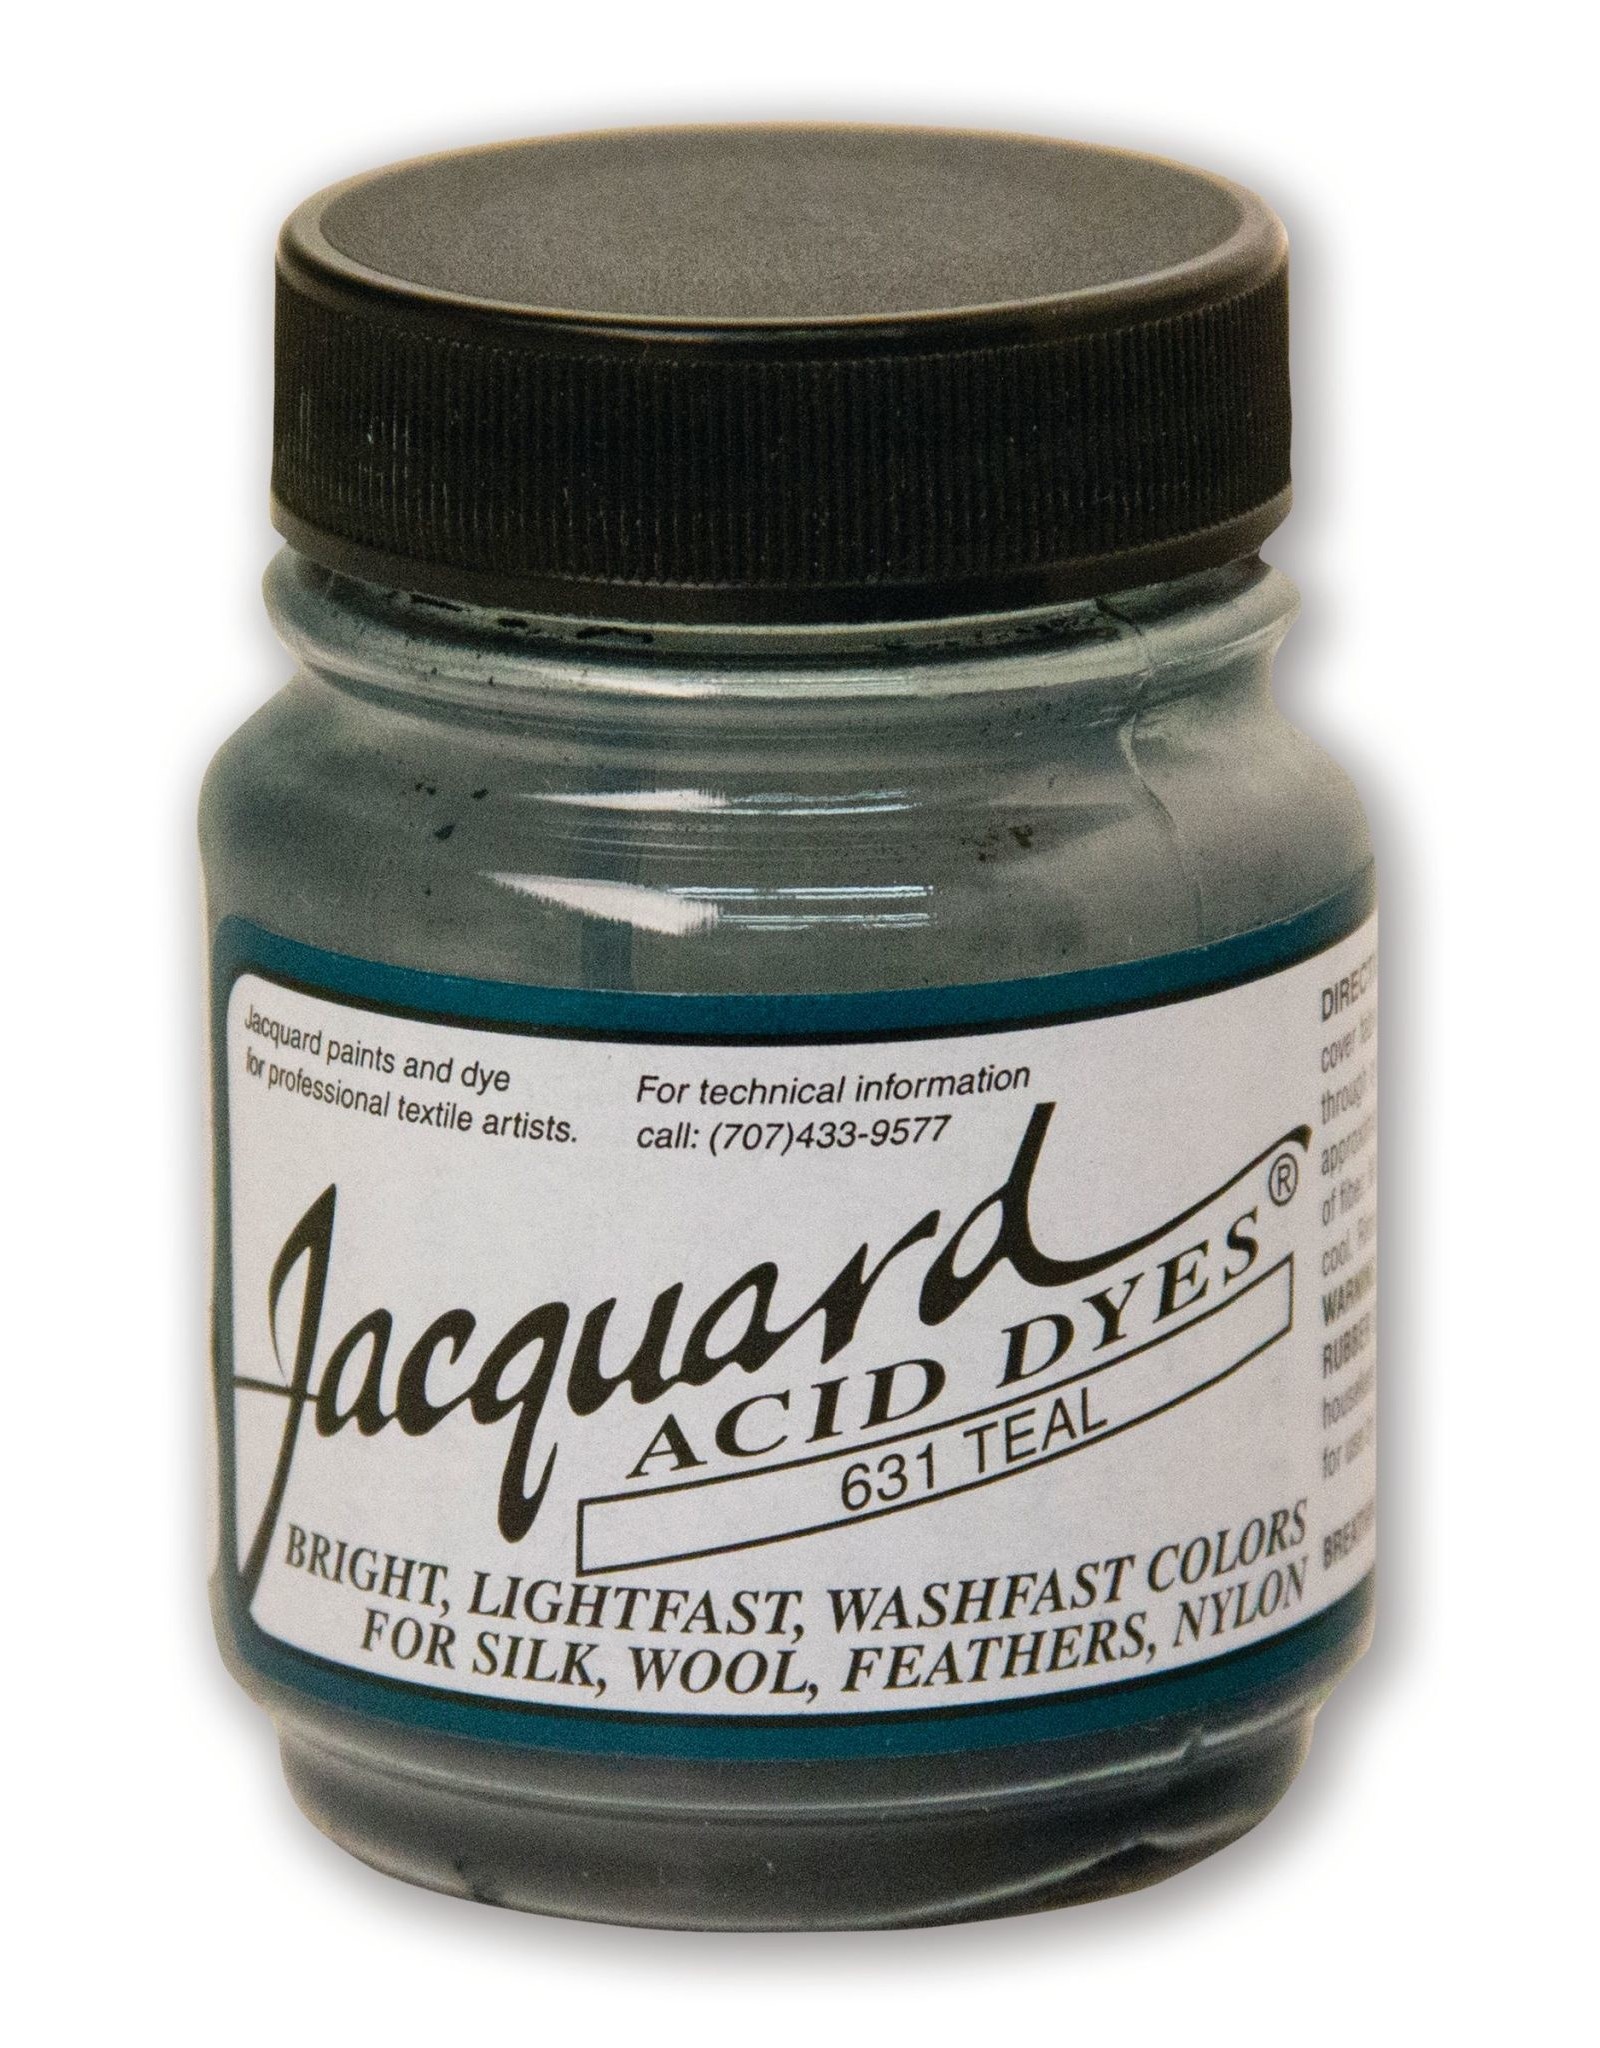 Jacquard Jacquard Acid Dye, #631 Teal ½oz